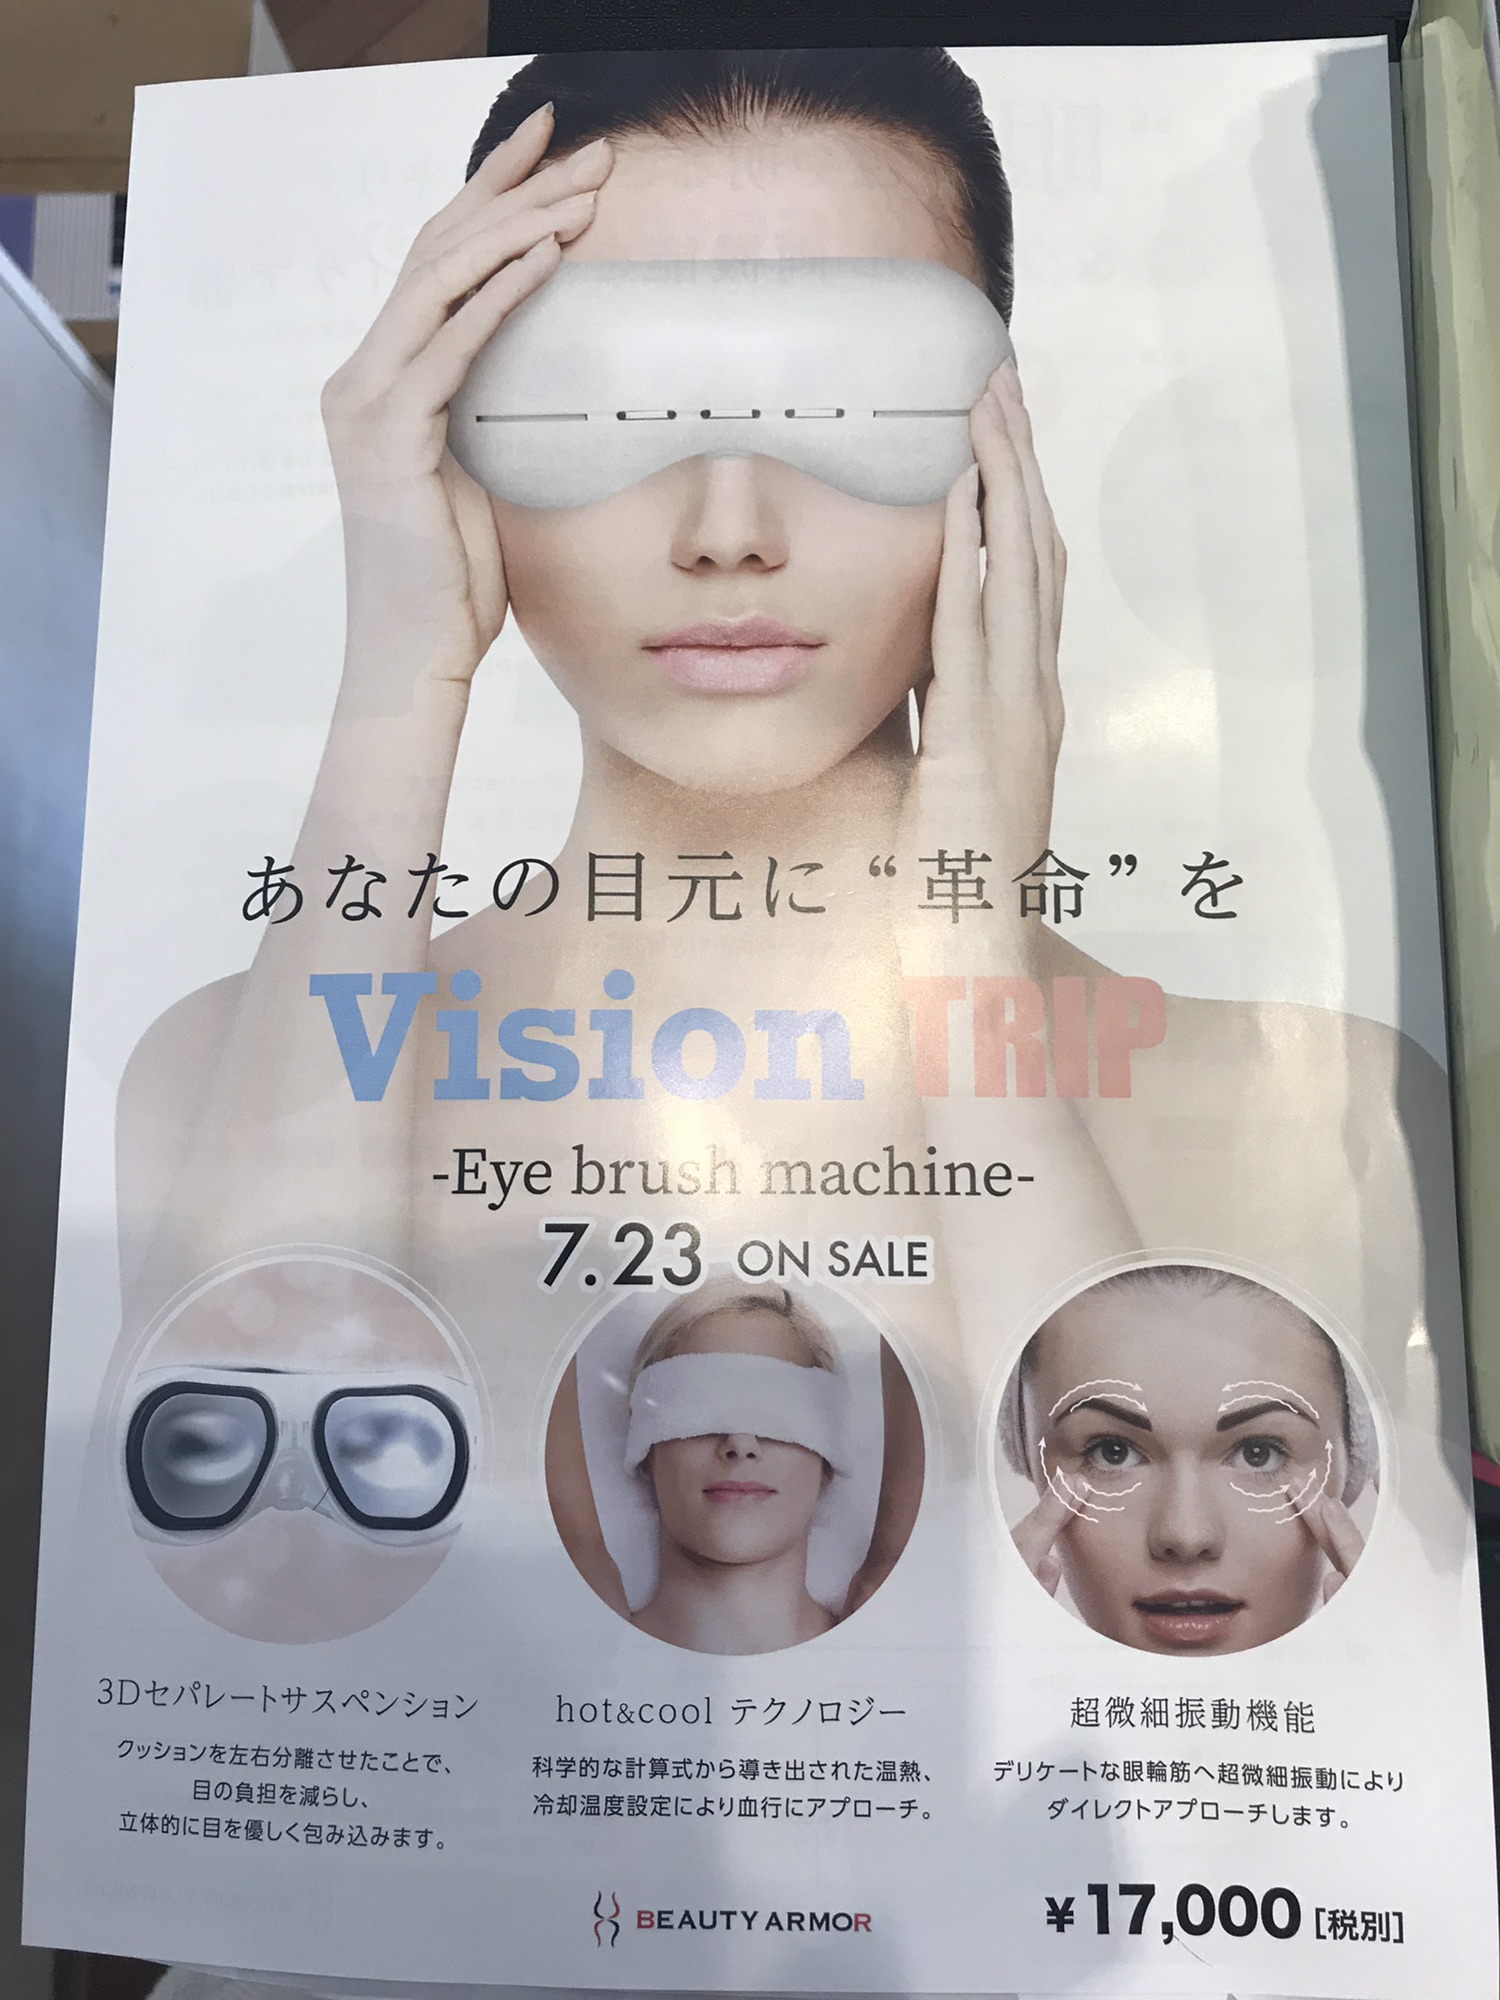 Vision trip (ビジョントリップ)導入します。(大阪 東大阪 美容室